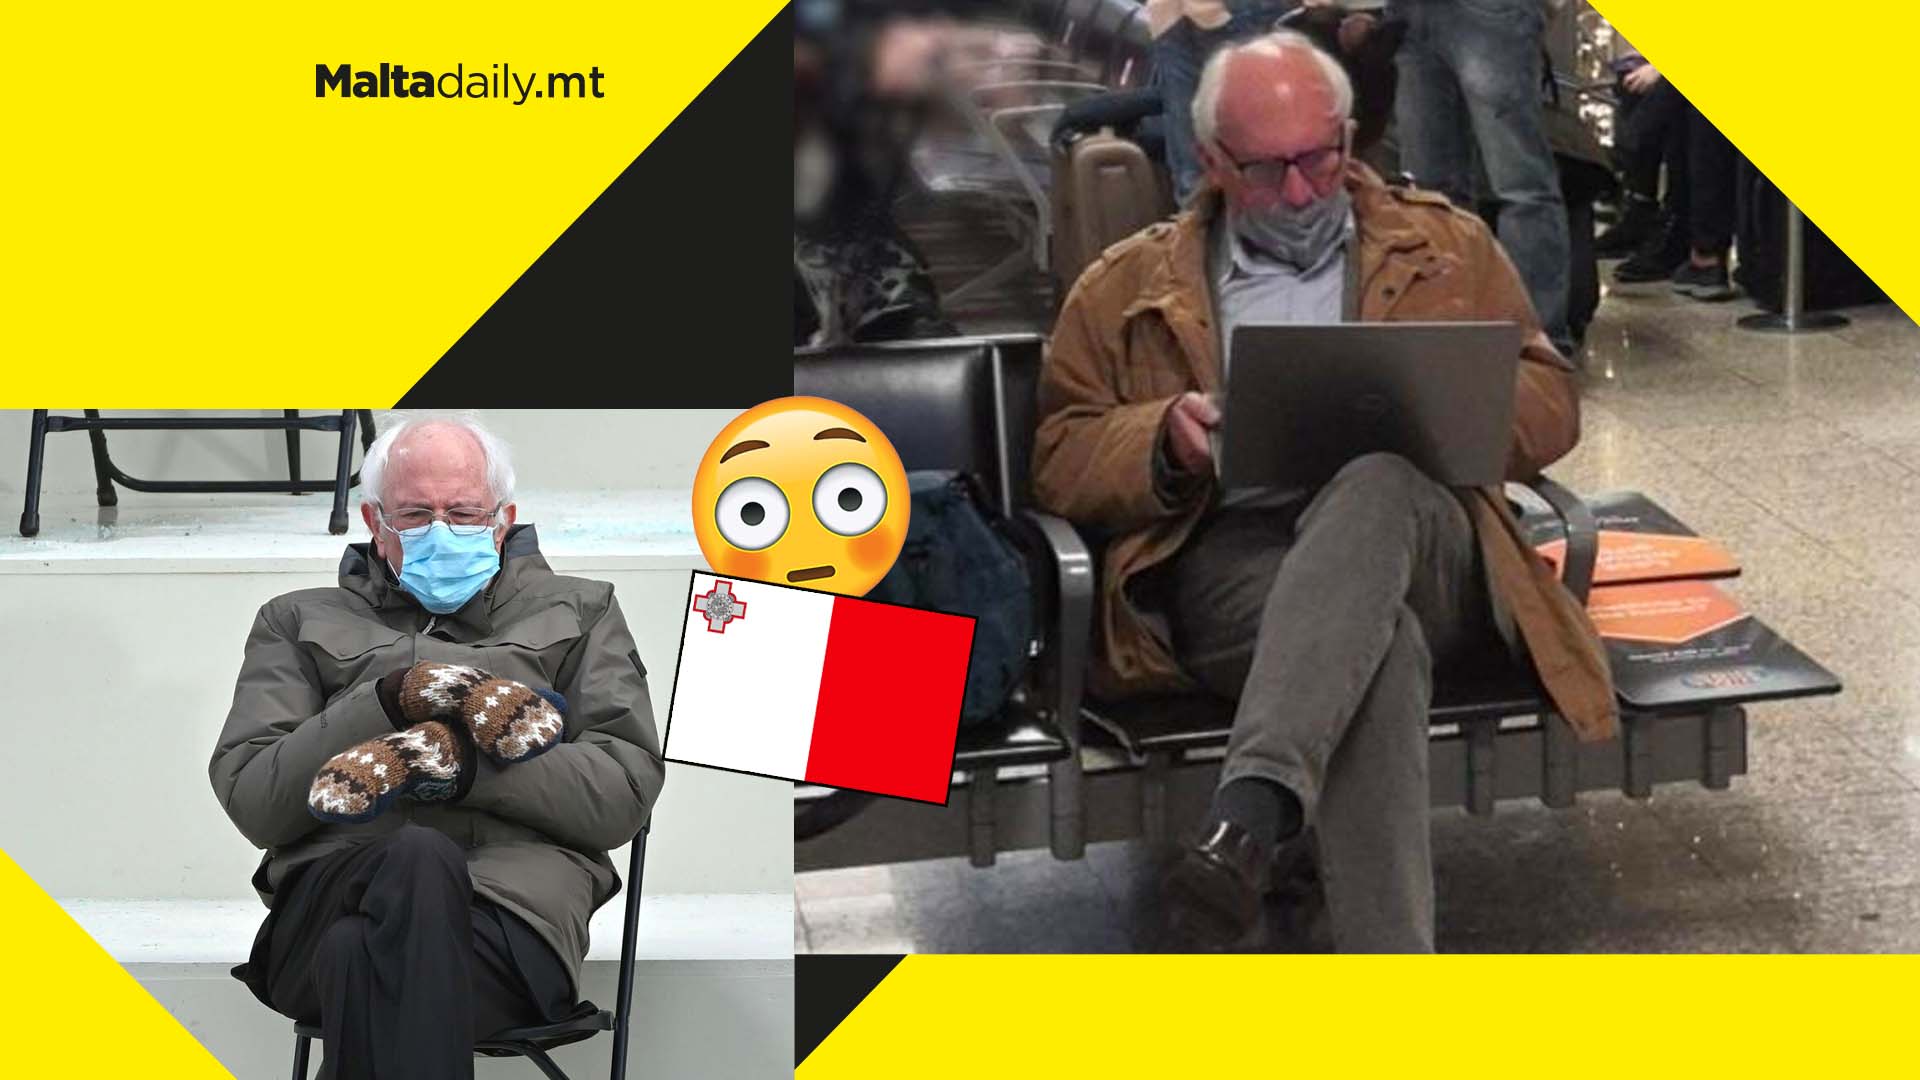 Bernie Sanders strikes meme pose at the Malta International Airport